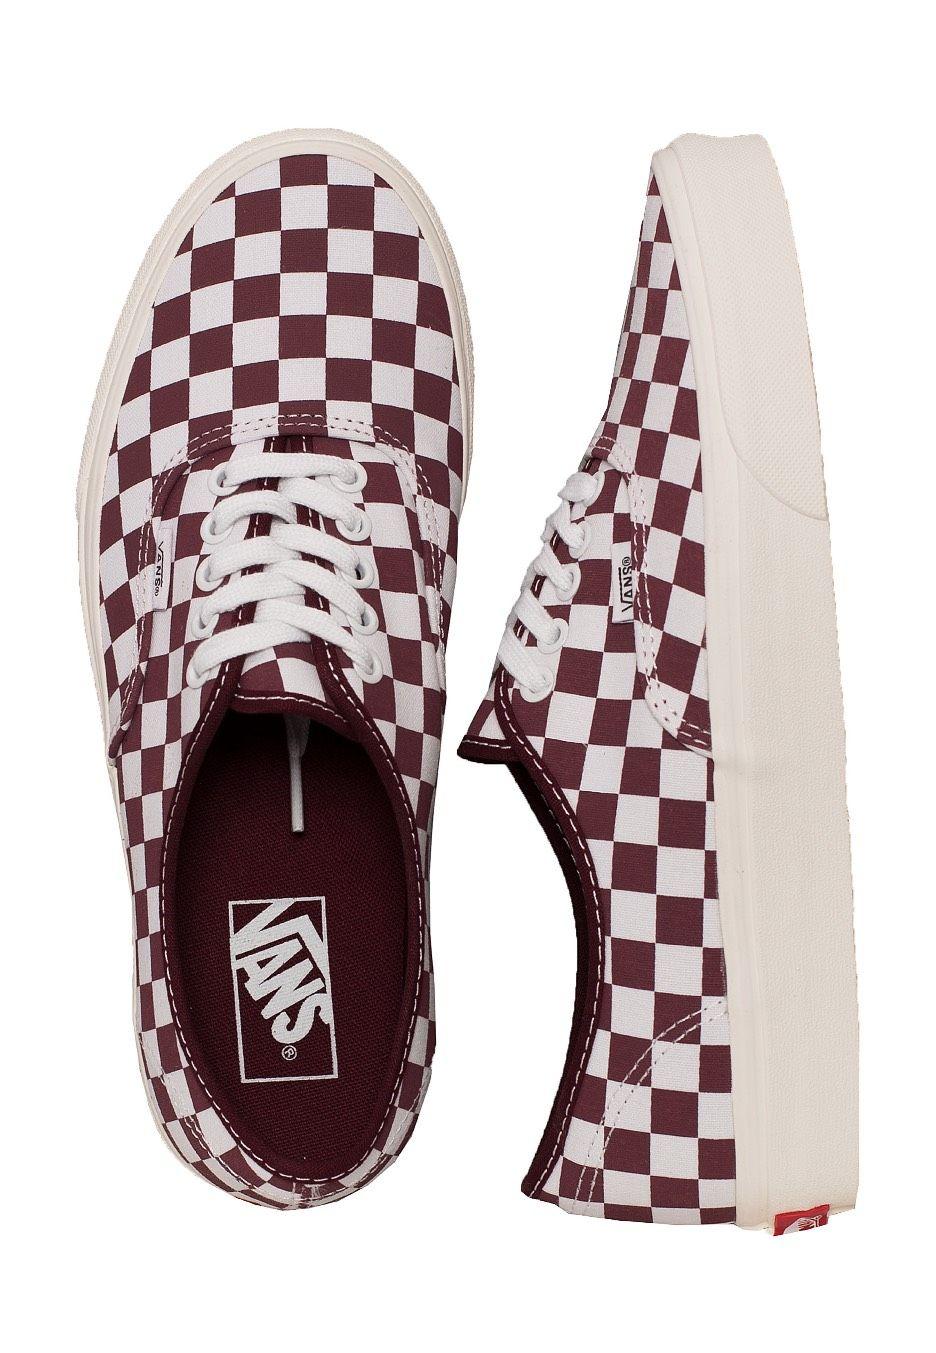 Checkerboard Vans Logo - Vans Checkerboard Port Royale Marshmallow Shoes